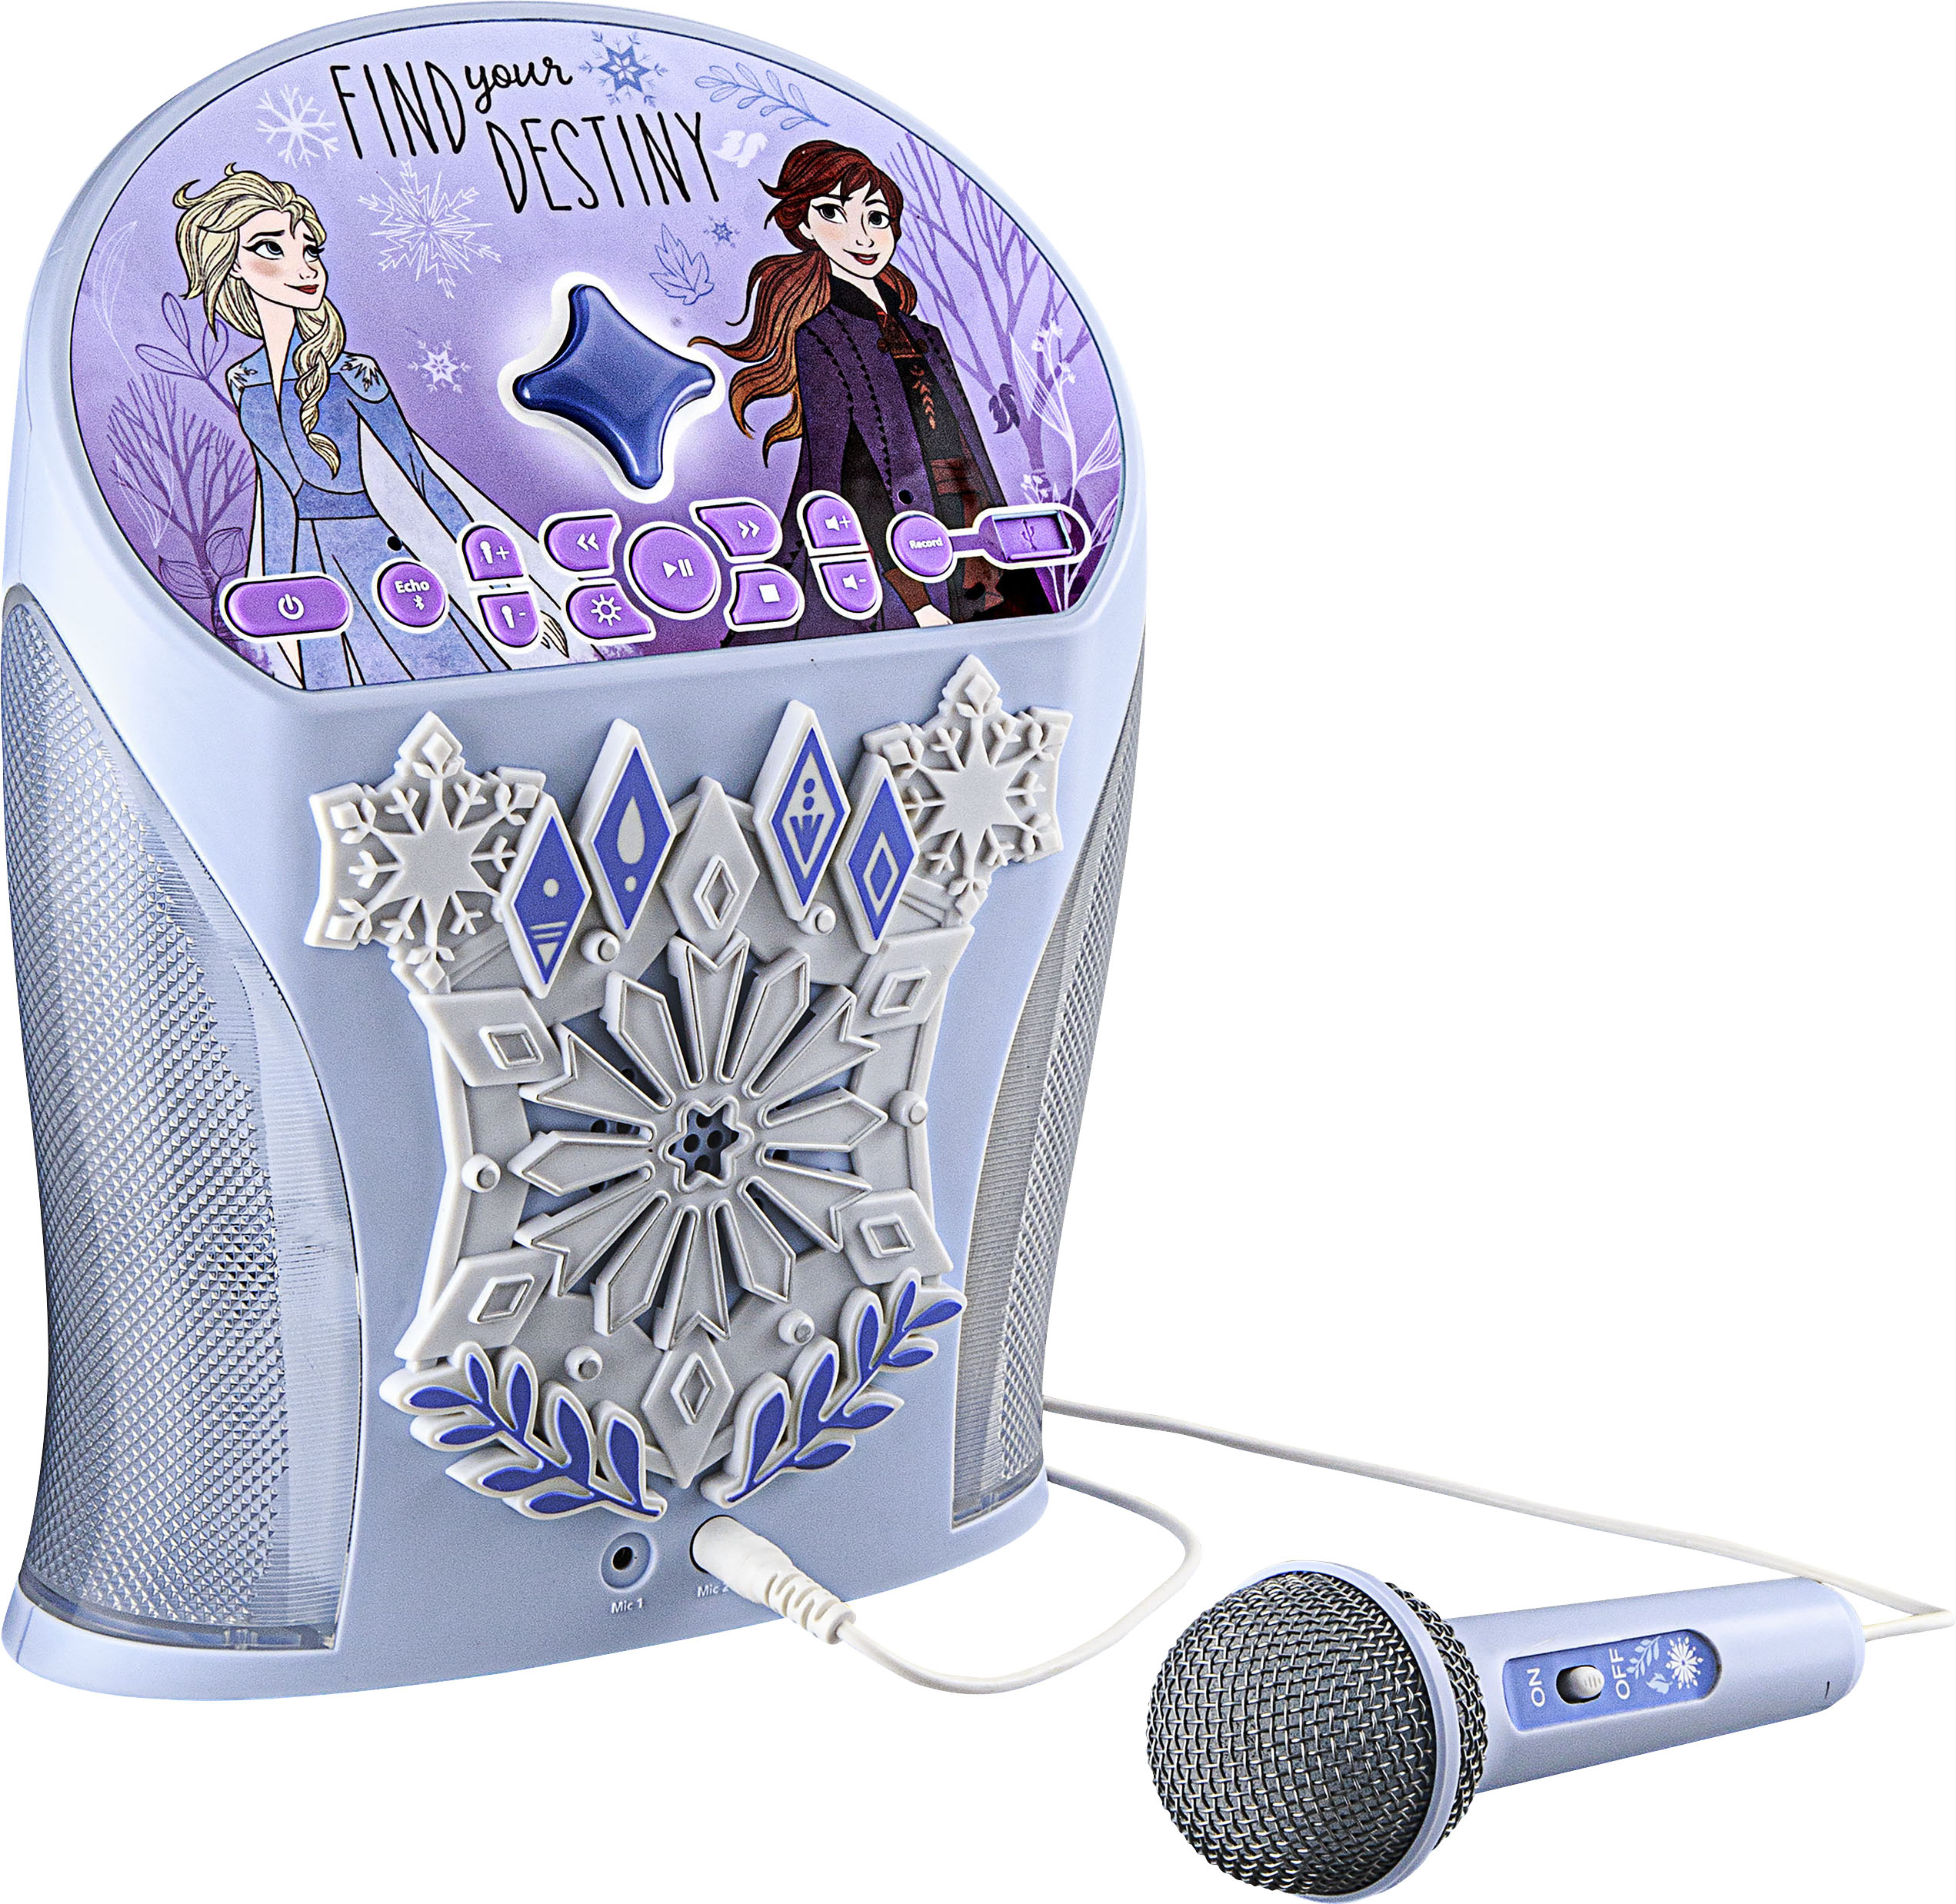 Angle View: eKids - Disney Frozen Bluetooth Karaoke with EZ Link Technology - Light Blue